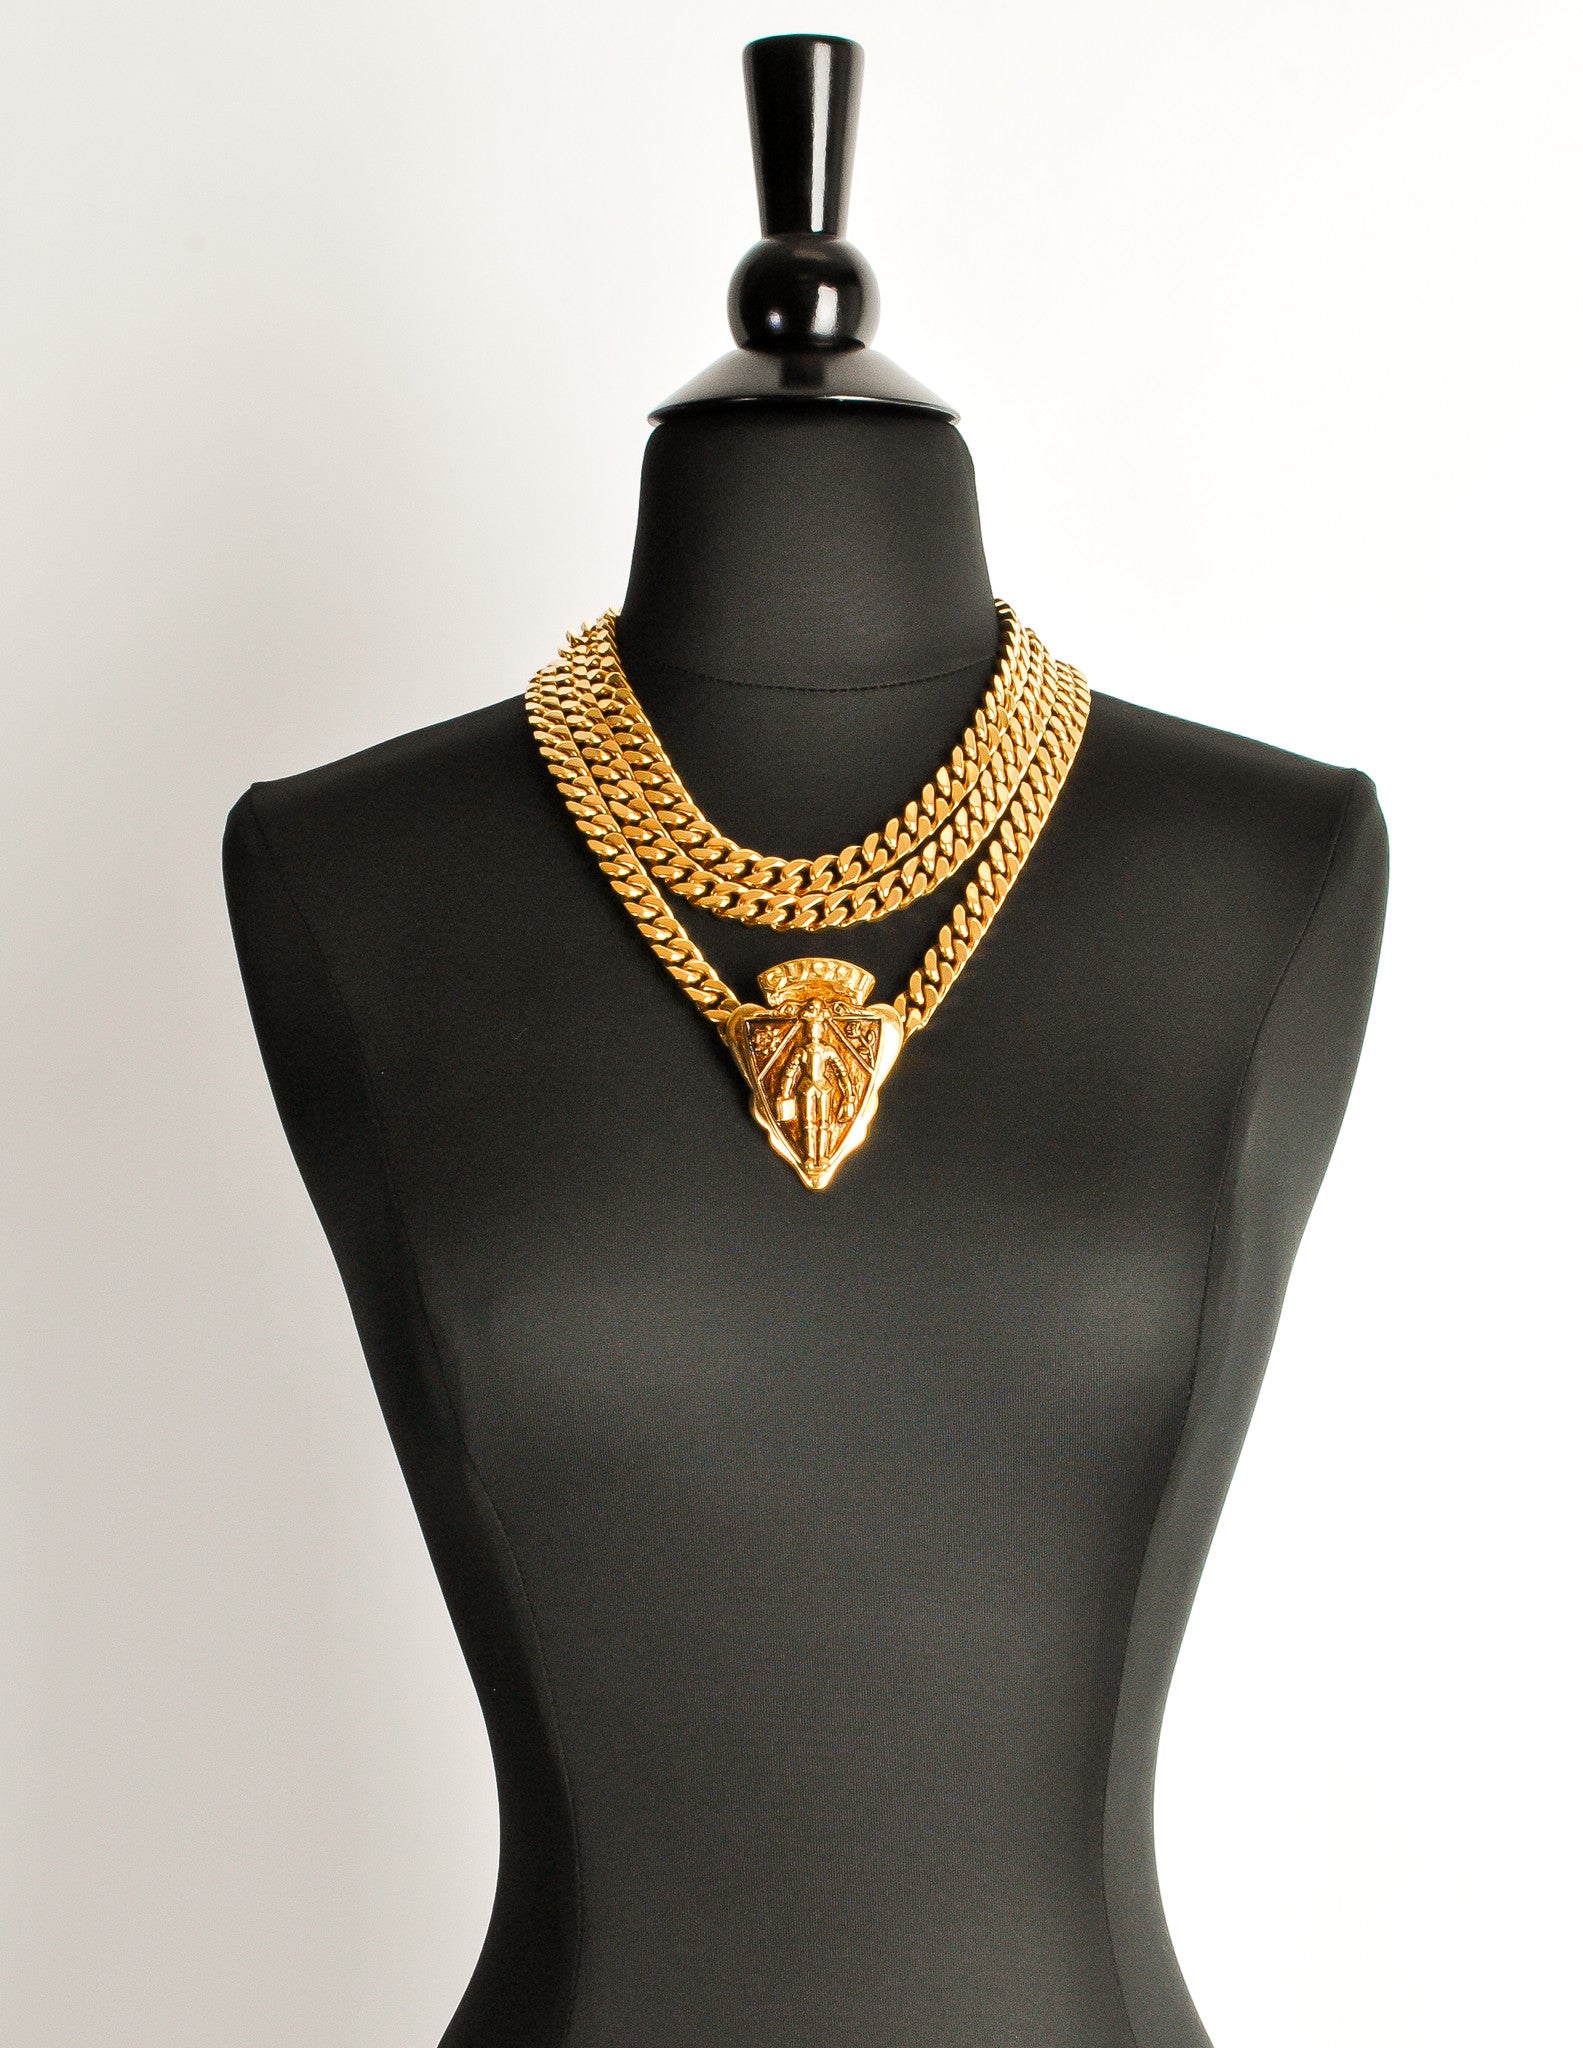 Gucci Vintage Gold Crest Chain Necklace Belt - from Amarcord Vintage Fashion